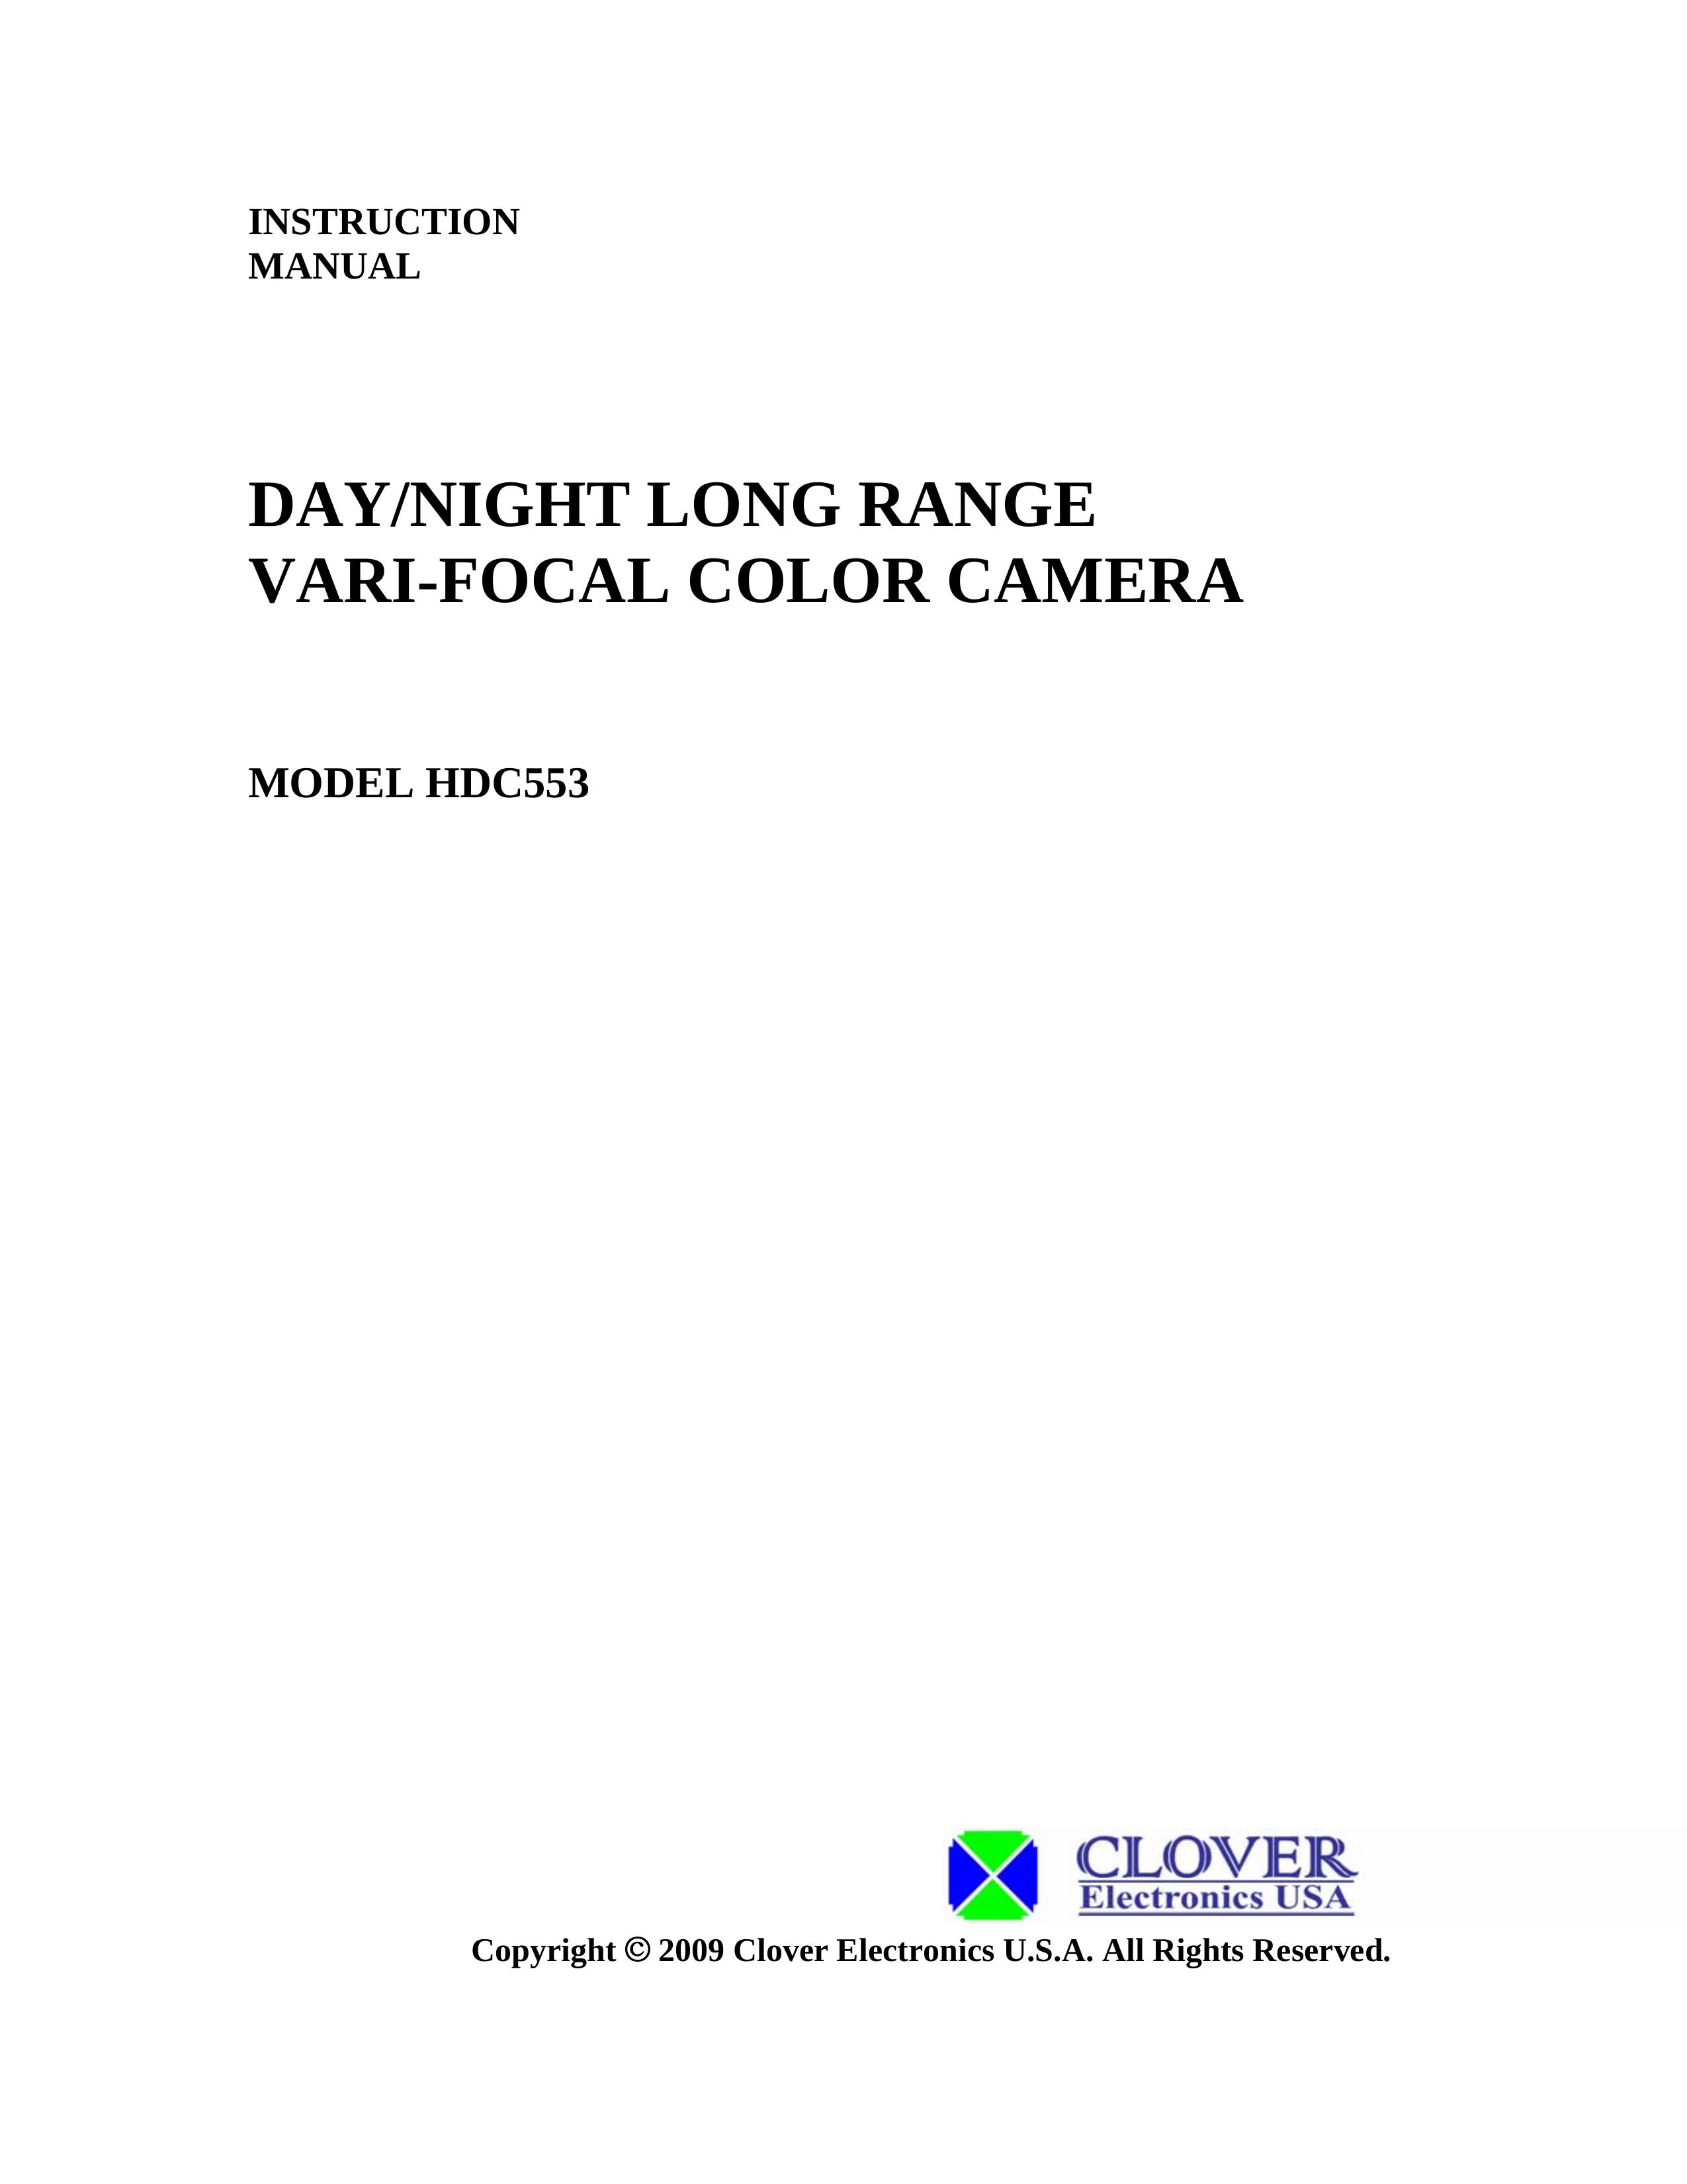 Clover Electronics HDC553 Digital Camera User Manual